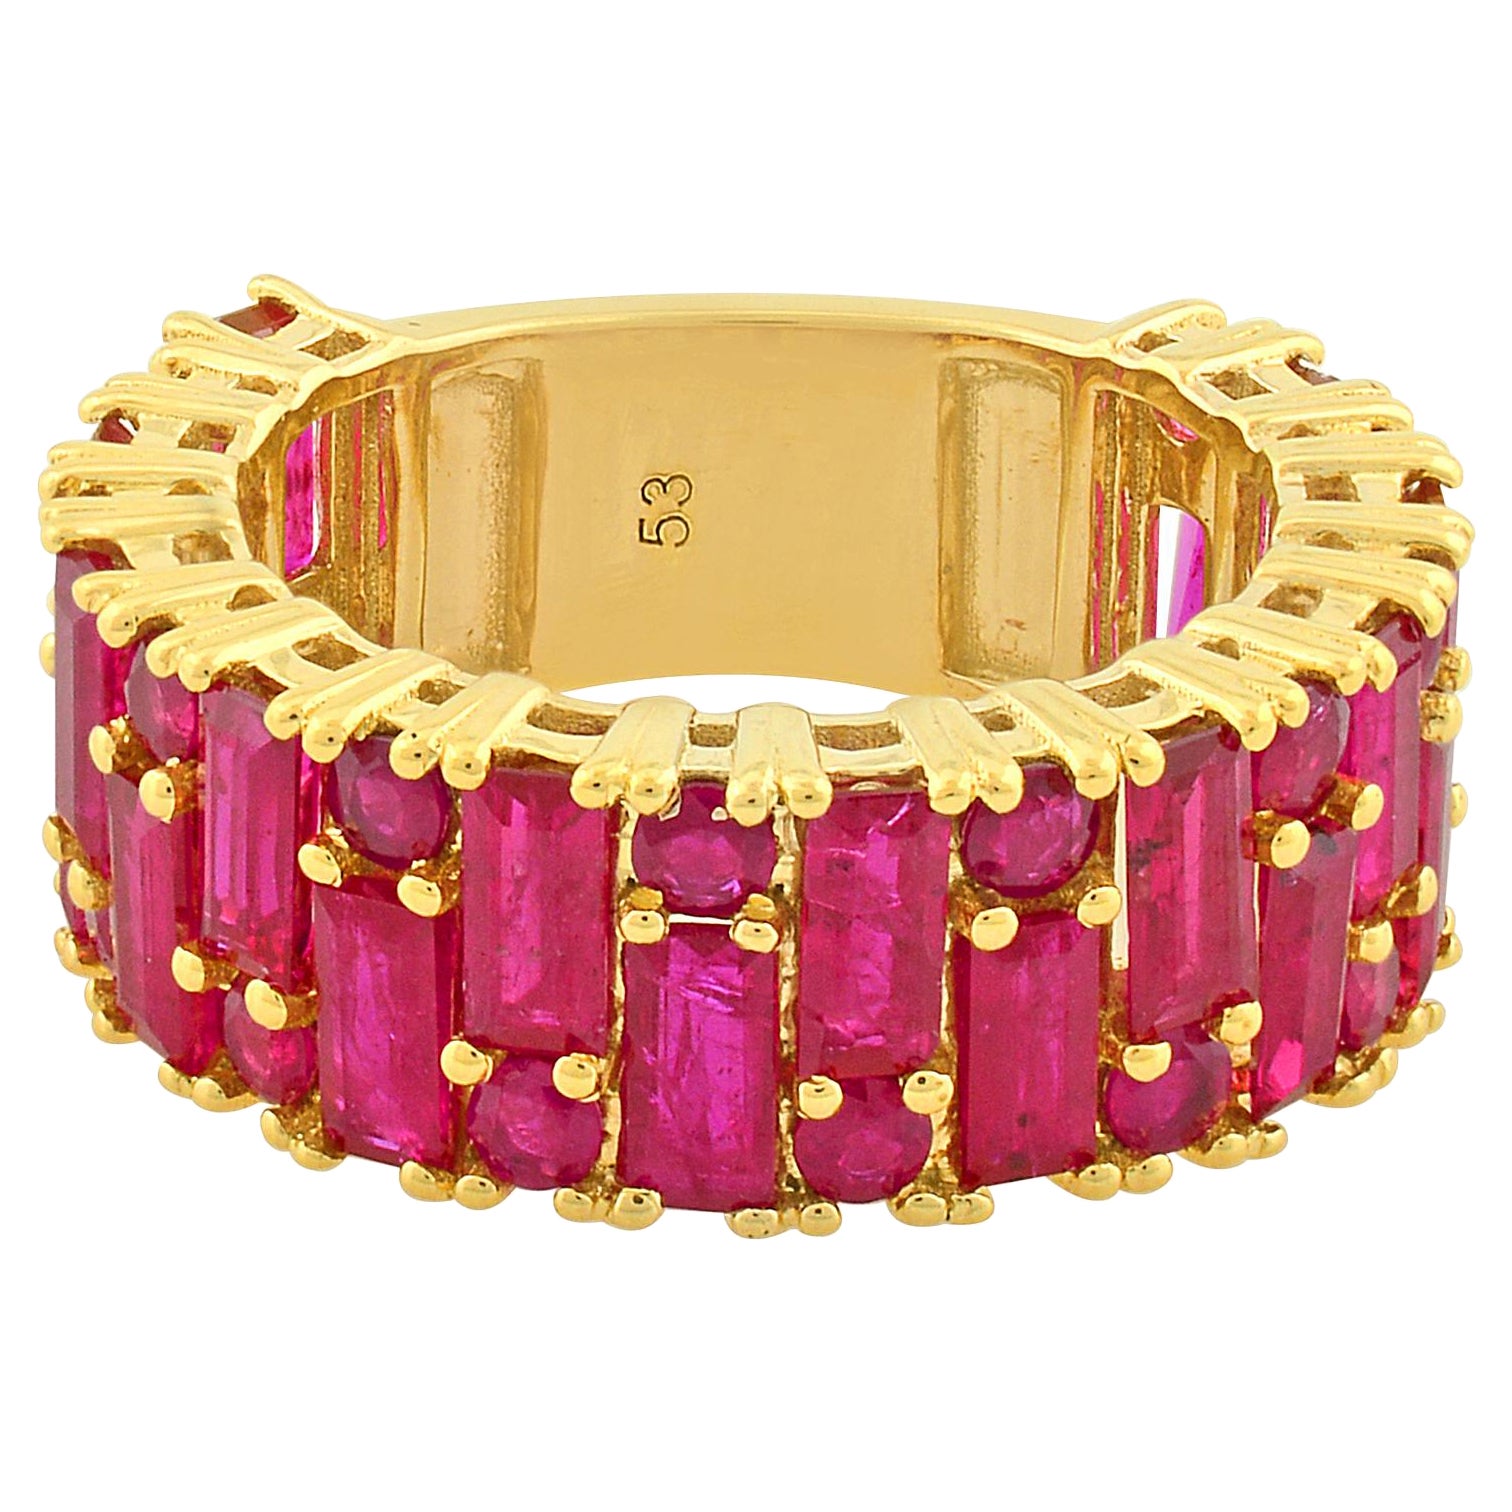 5.76 Carat Ruby Gemstone Band Ring Solid 14k Yellow Gold Handmade Fine Jewelry